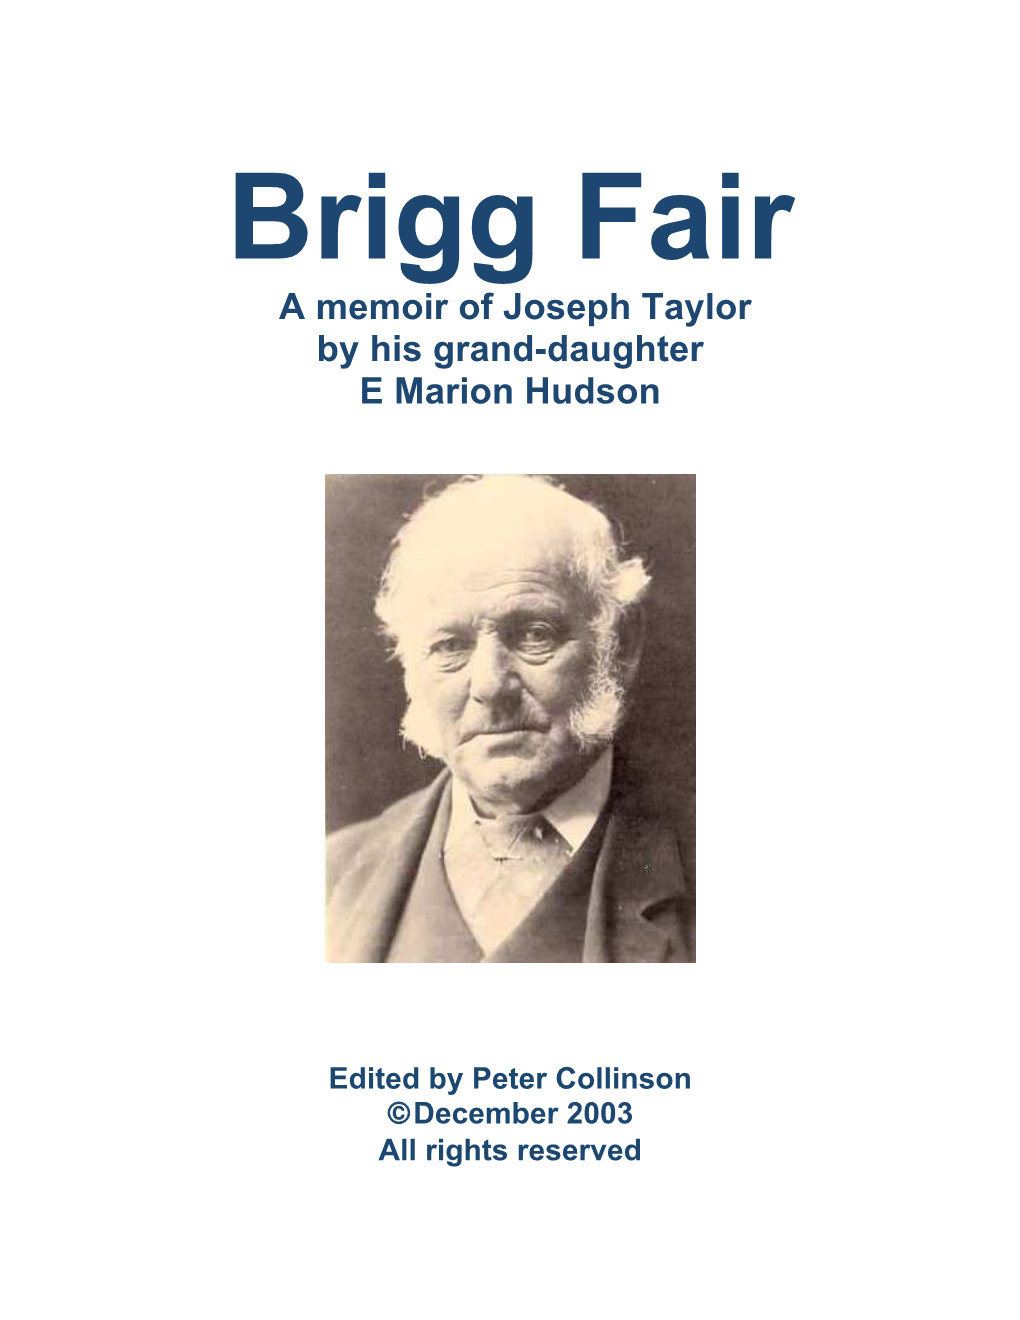 Brigg Fair: a Memoir of Joseph Taylor by His Grand-Daughter E Marion